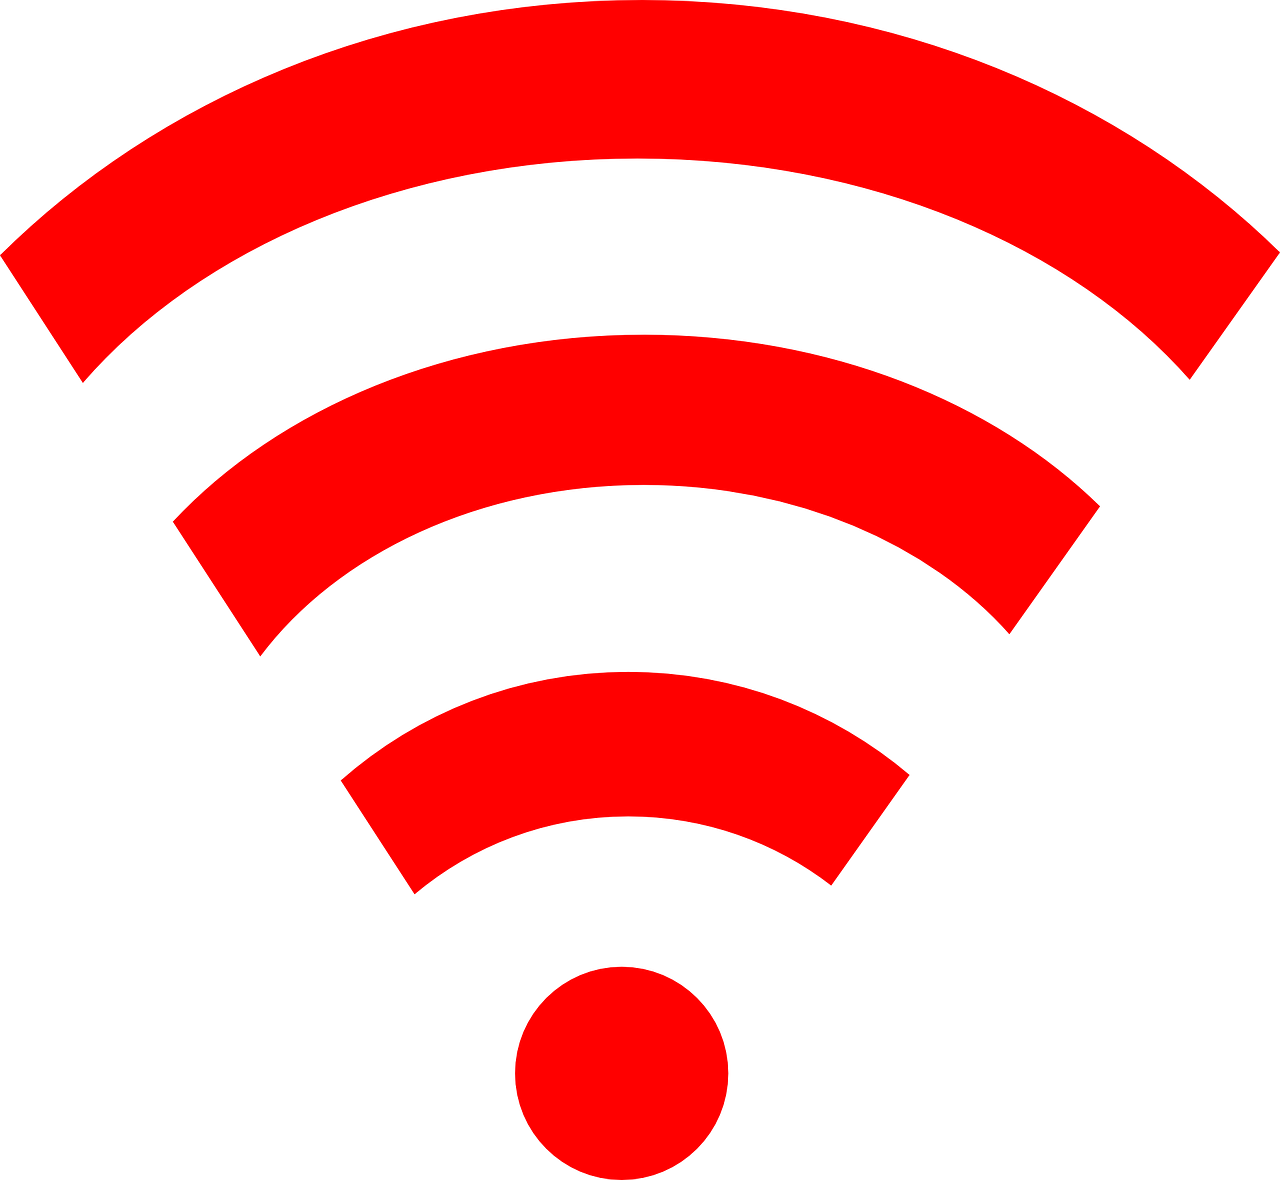 a red wifi icon on a black background, an illustration of, by Mirko Rački, black on white background, cellular, 7 0 s, wikimedia